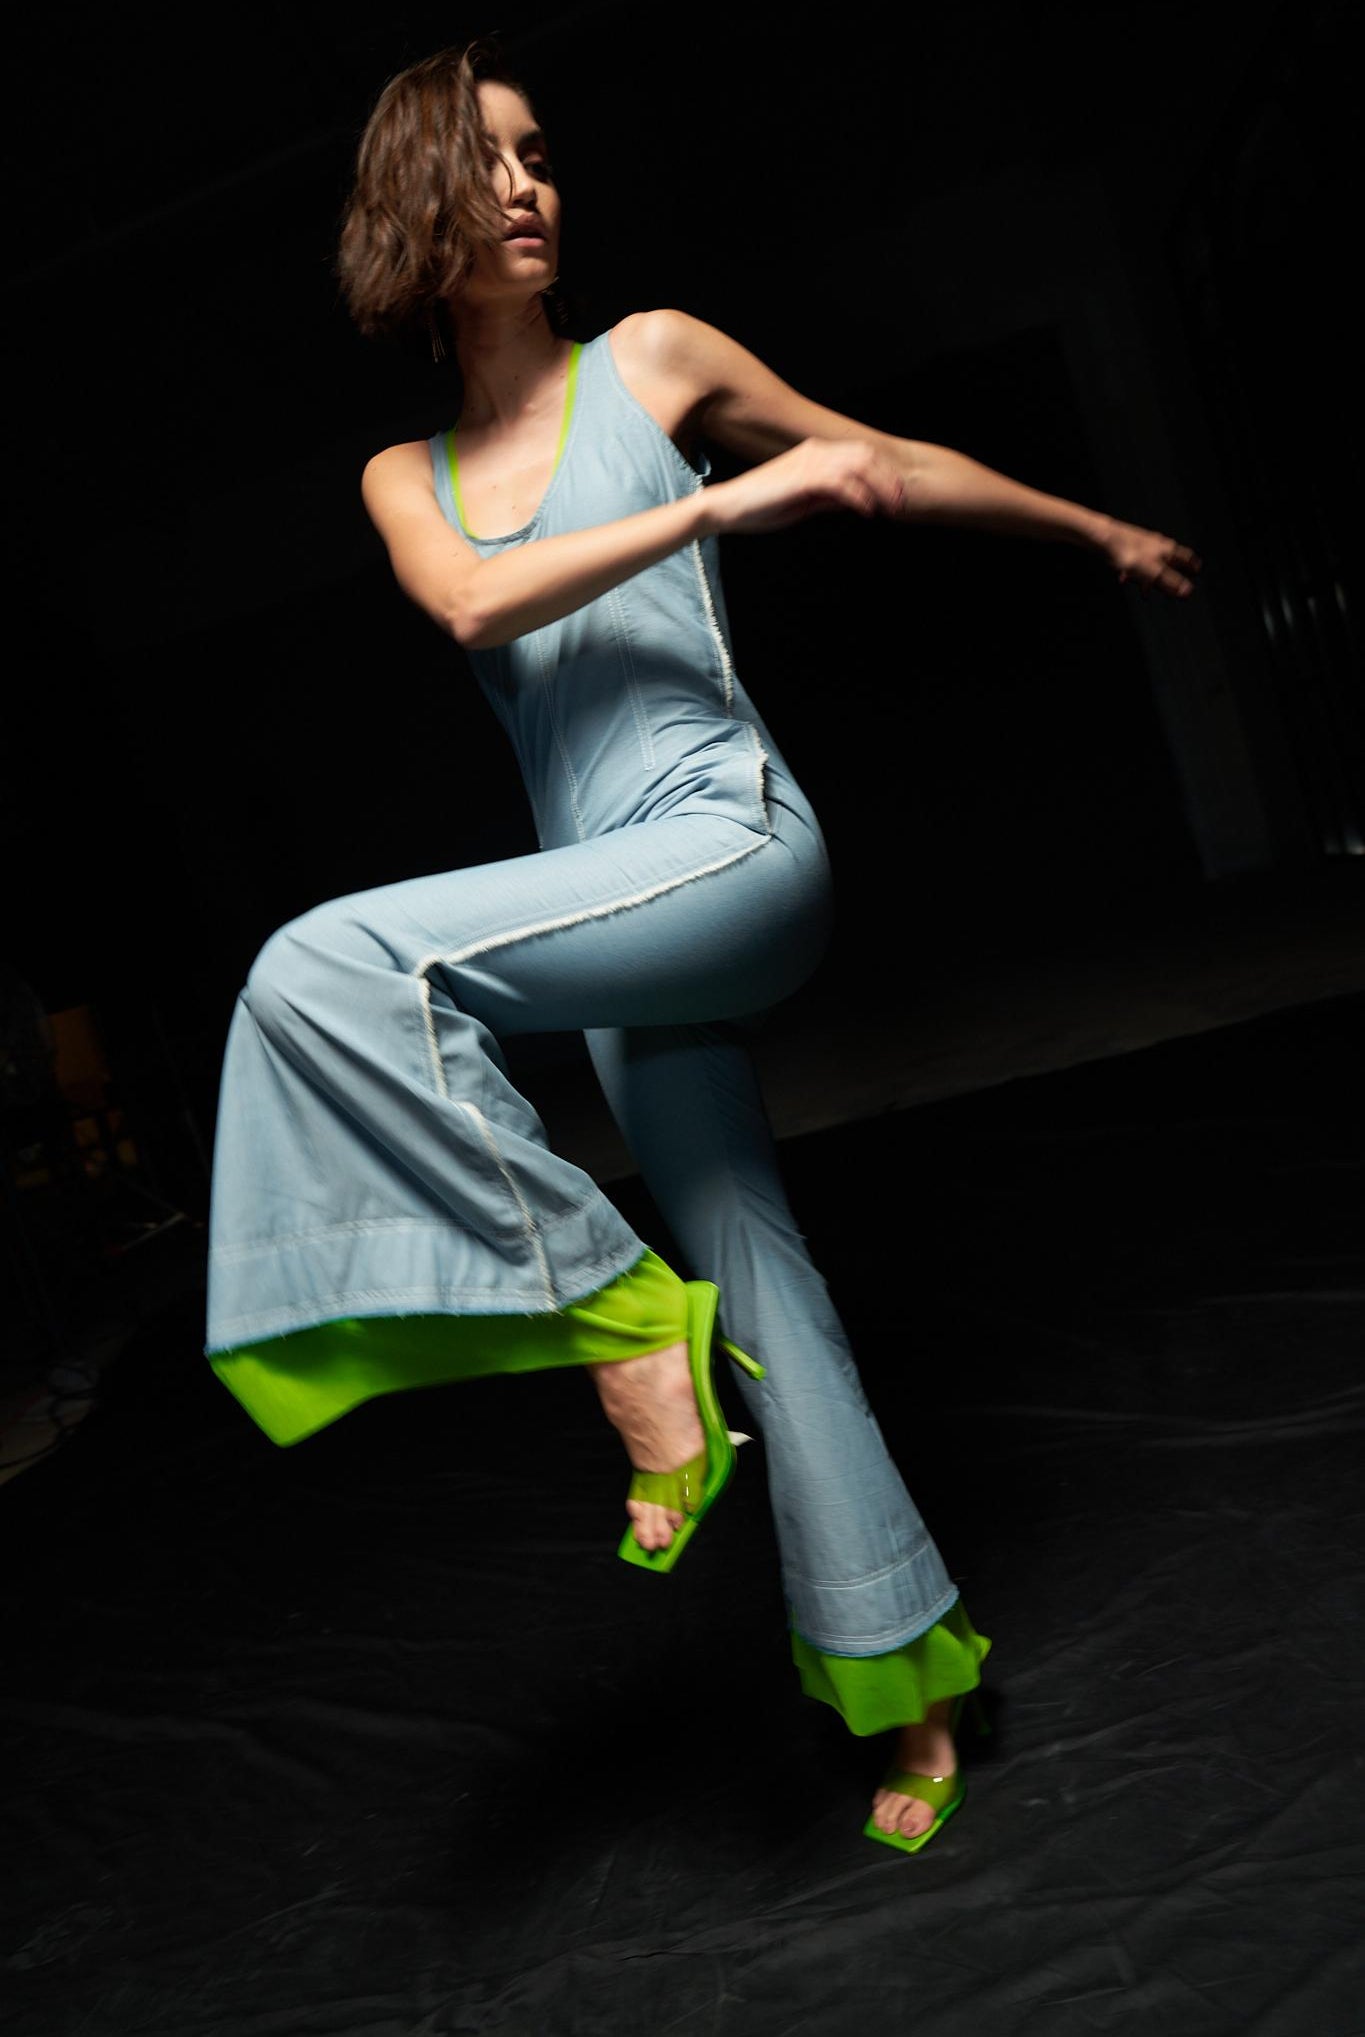 Jumpsuit with Neon Green Accent - CiceroniJumpsuitPriyanca Khanna